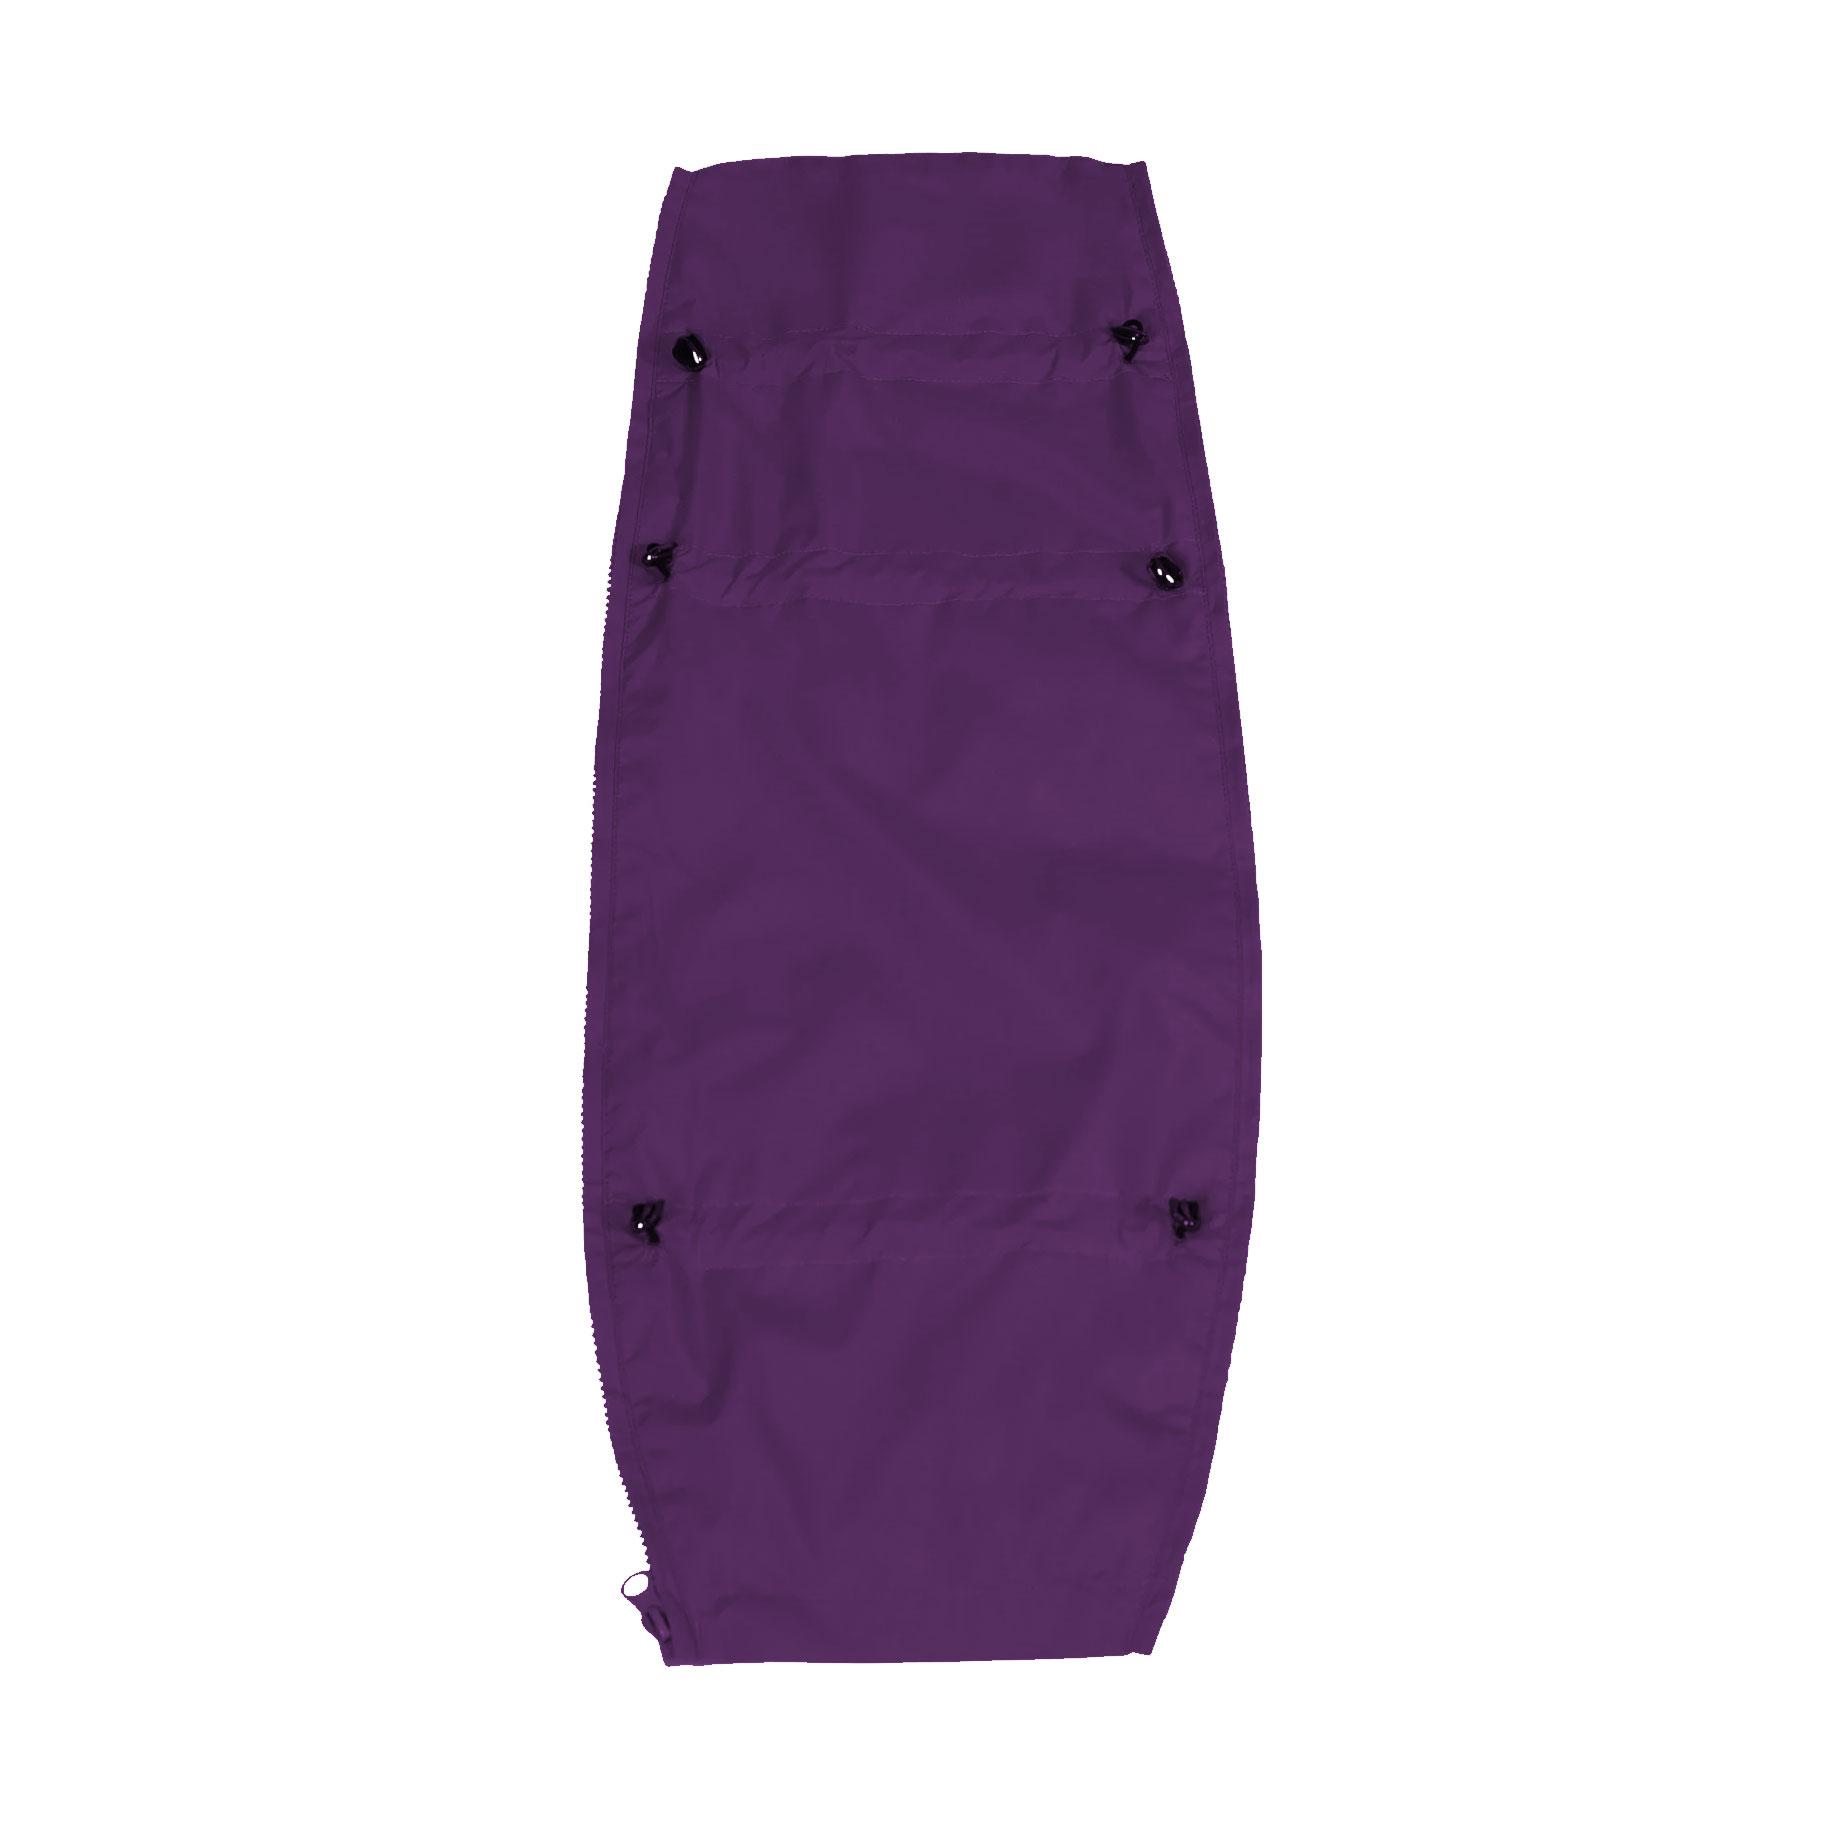 numbat-go-maternity-jacket-insert-panel-purple-pshop-square